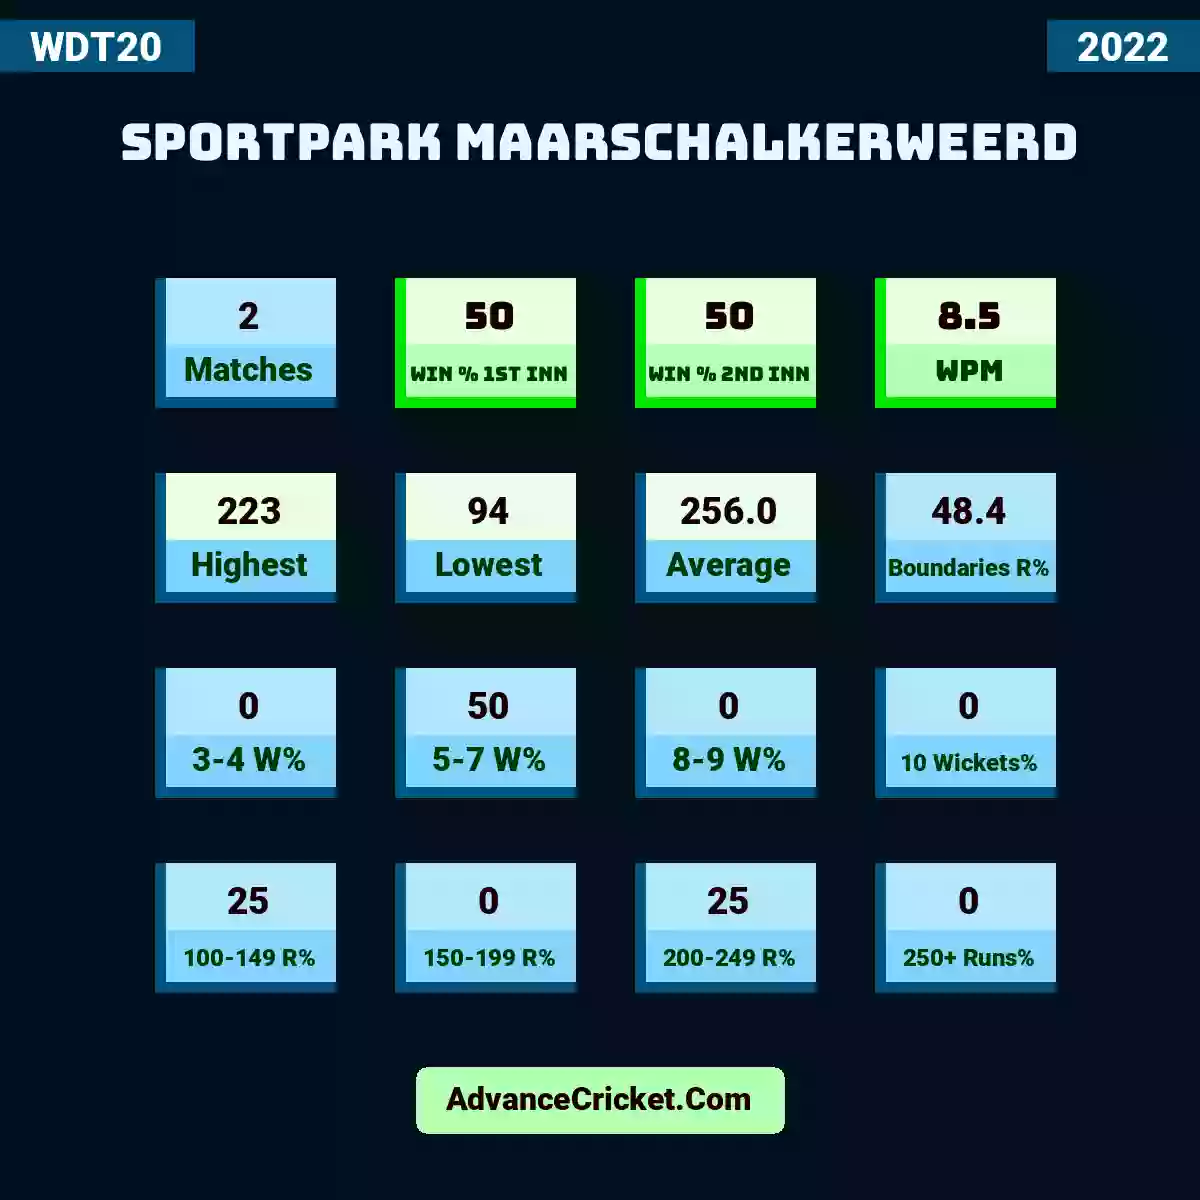 Image showing Sportpark Maarschalkerweerd with Matches: 2, Win % 1st Inn: 50, Win % 2nd Inn: 50, WPM: 8.5, Highest: 223, Lowest: 94, Average: 256.0, Boundaries R%: 48.4, 3-4 W%: 0, 5-7 W%: 50, 8-9 W%: 0, 10 Wickets%: 0, 100-149 R%: 25, 150-199 R%: 0, 200-249 R%: 25, 250+ Runs%: 0.